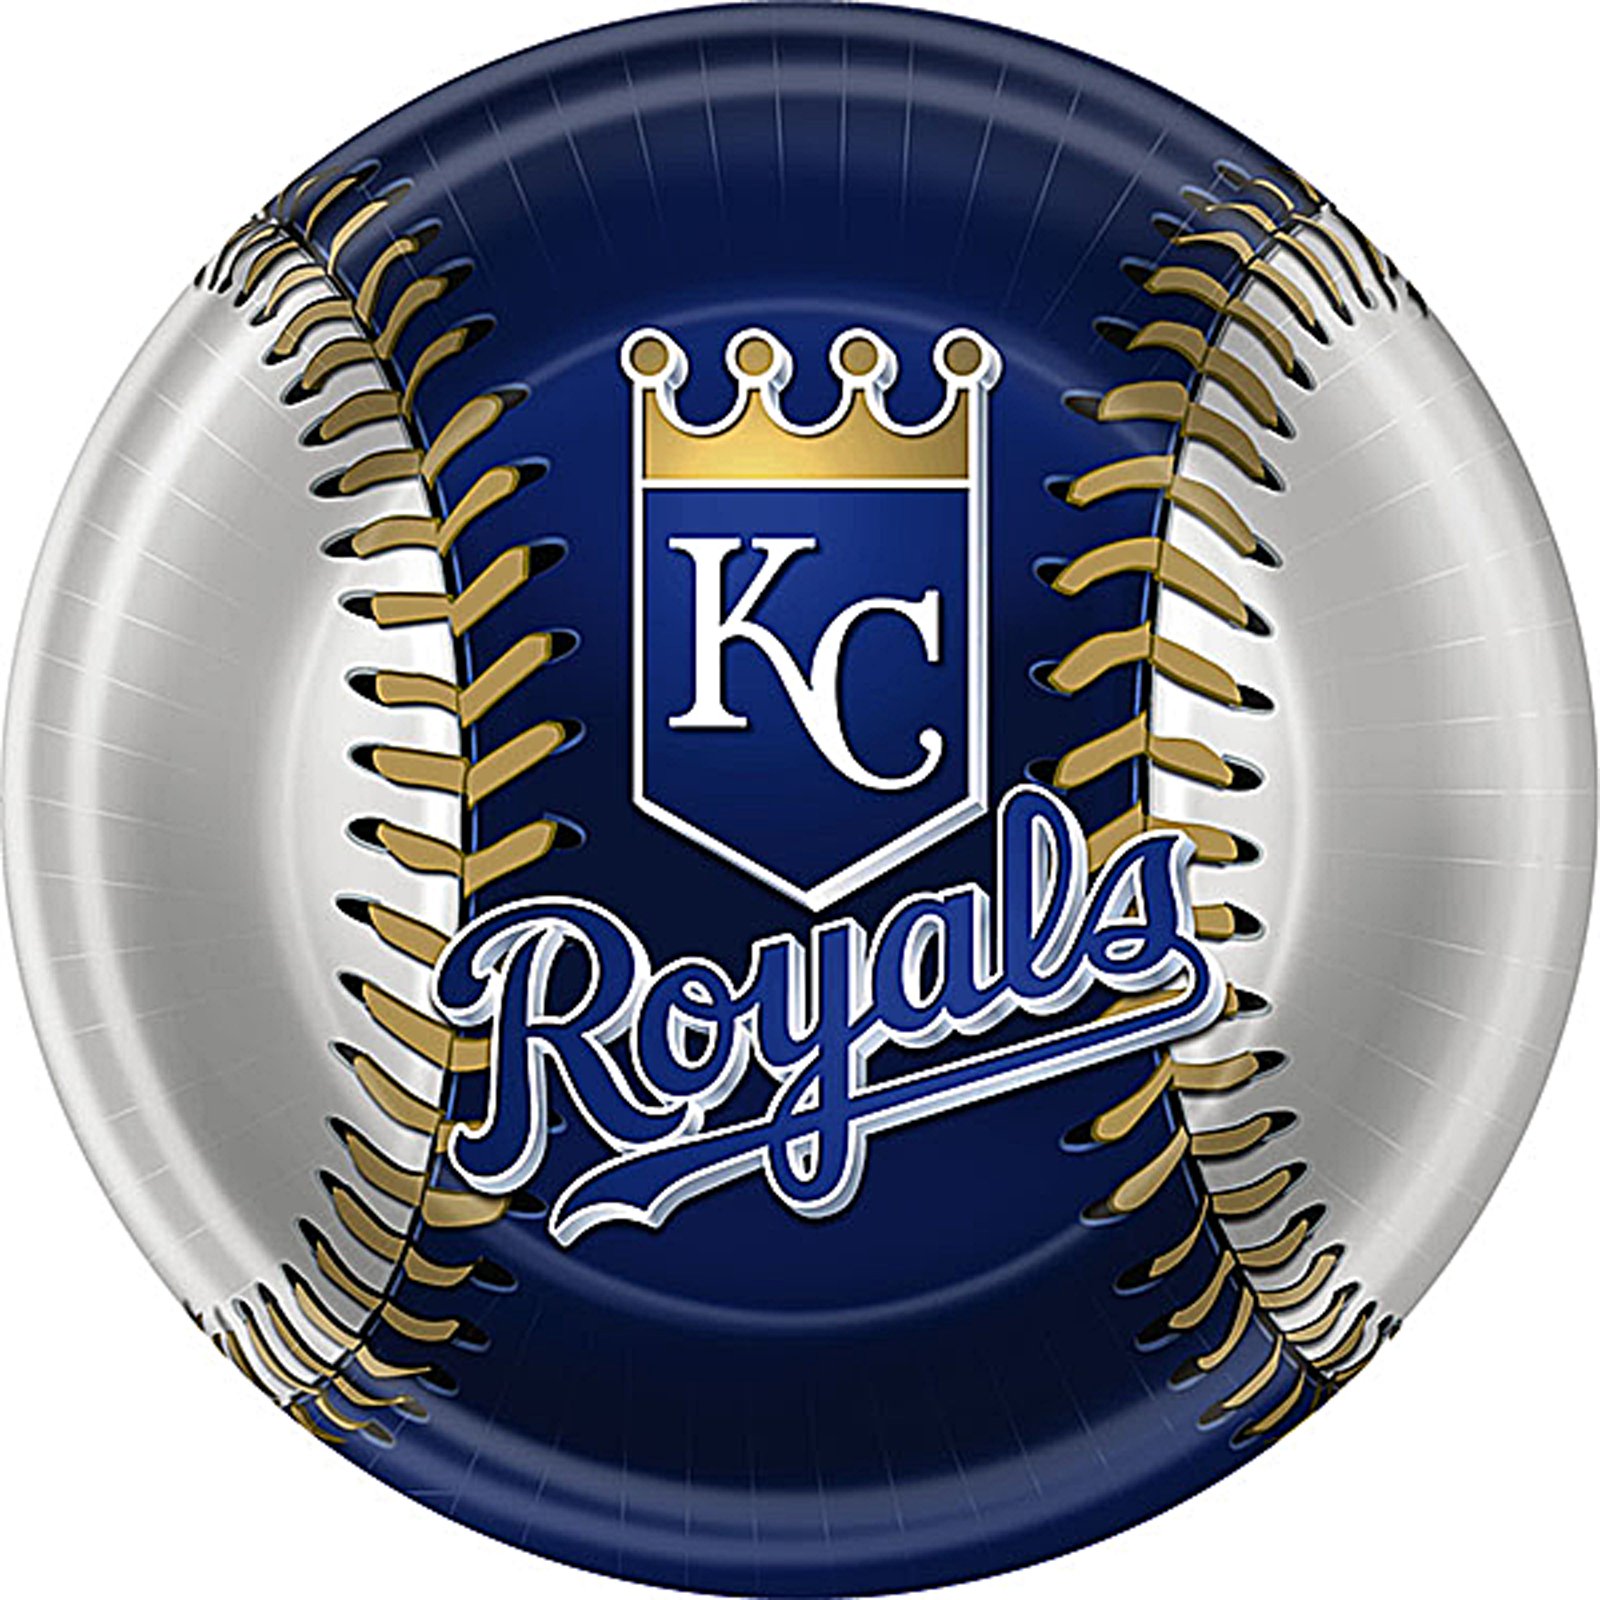 The Kansas City Royals are a member of Major League Baseballs